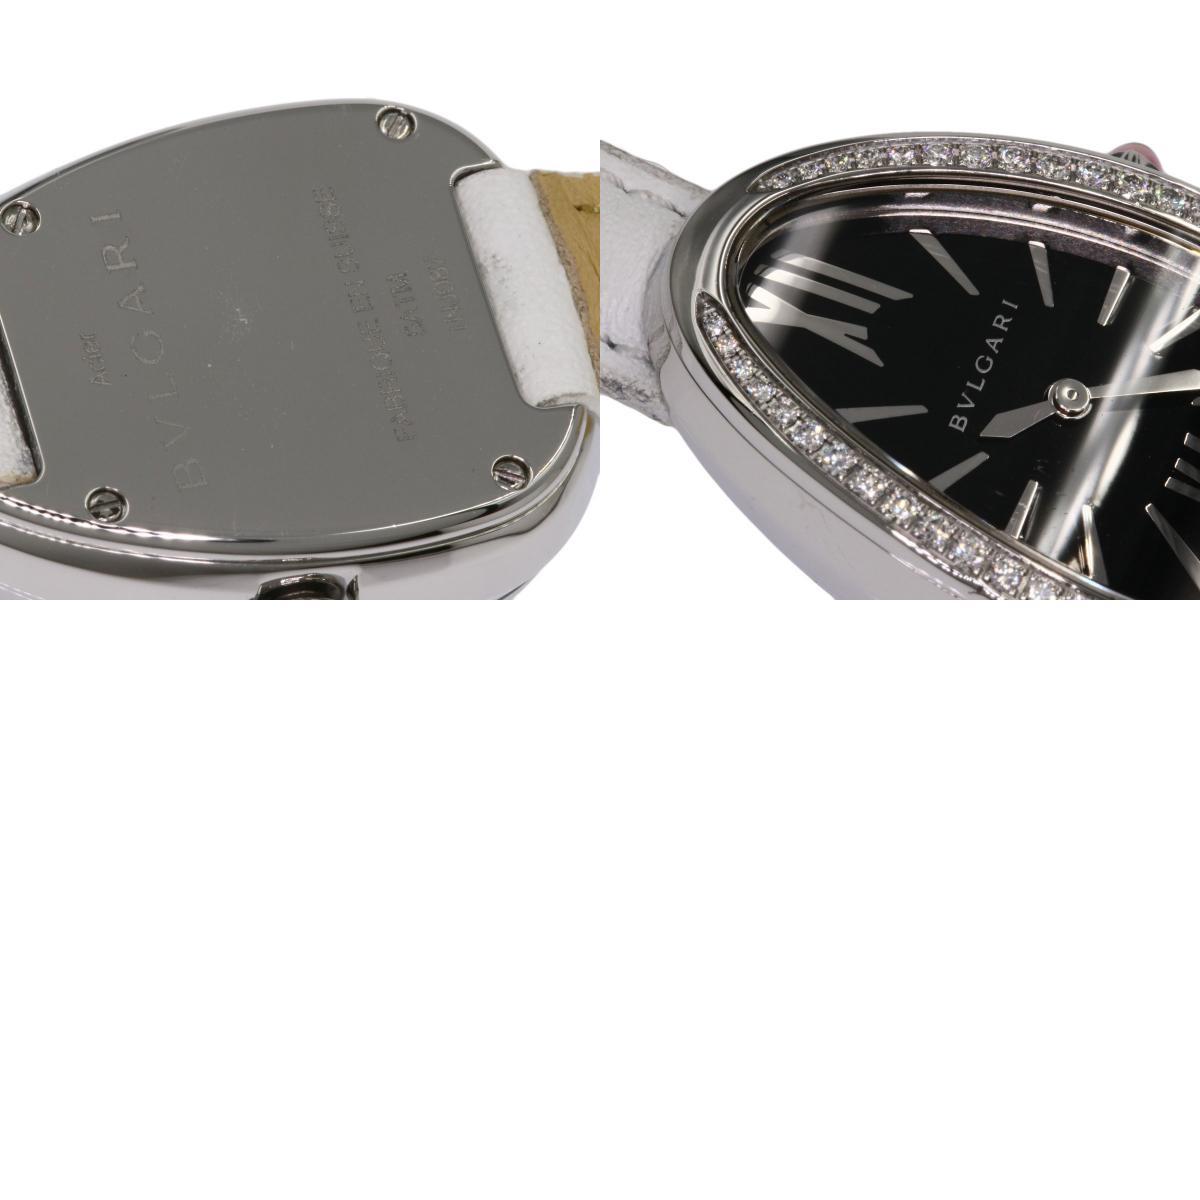 BVLGARI ブルガリ SP32BSDL セルペンティ ベゼルダイヤモンド 腕時計 ステンレススチール 革 ダイヤモンド レディース 中古_画像10